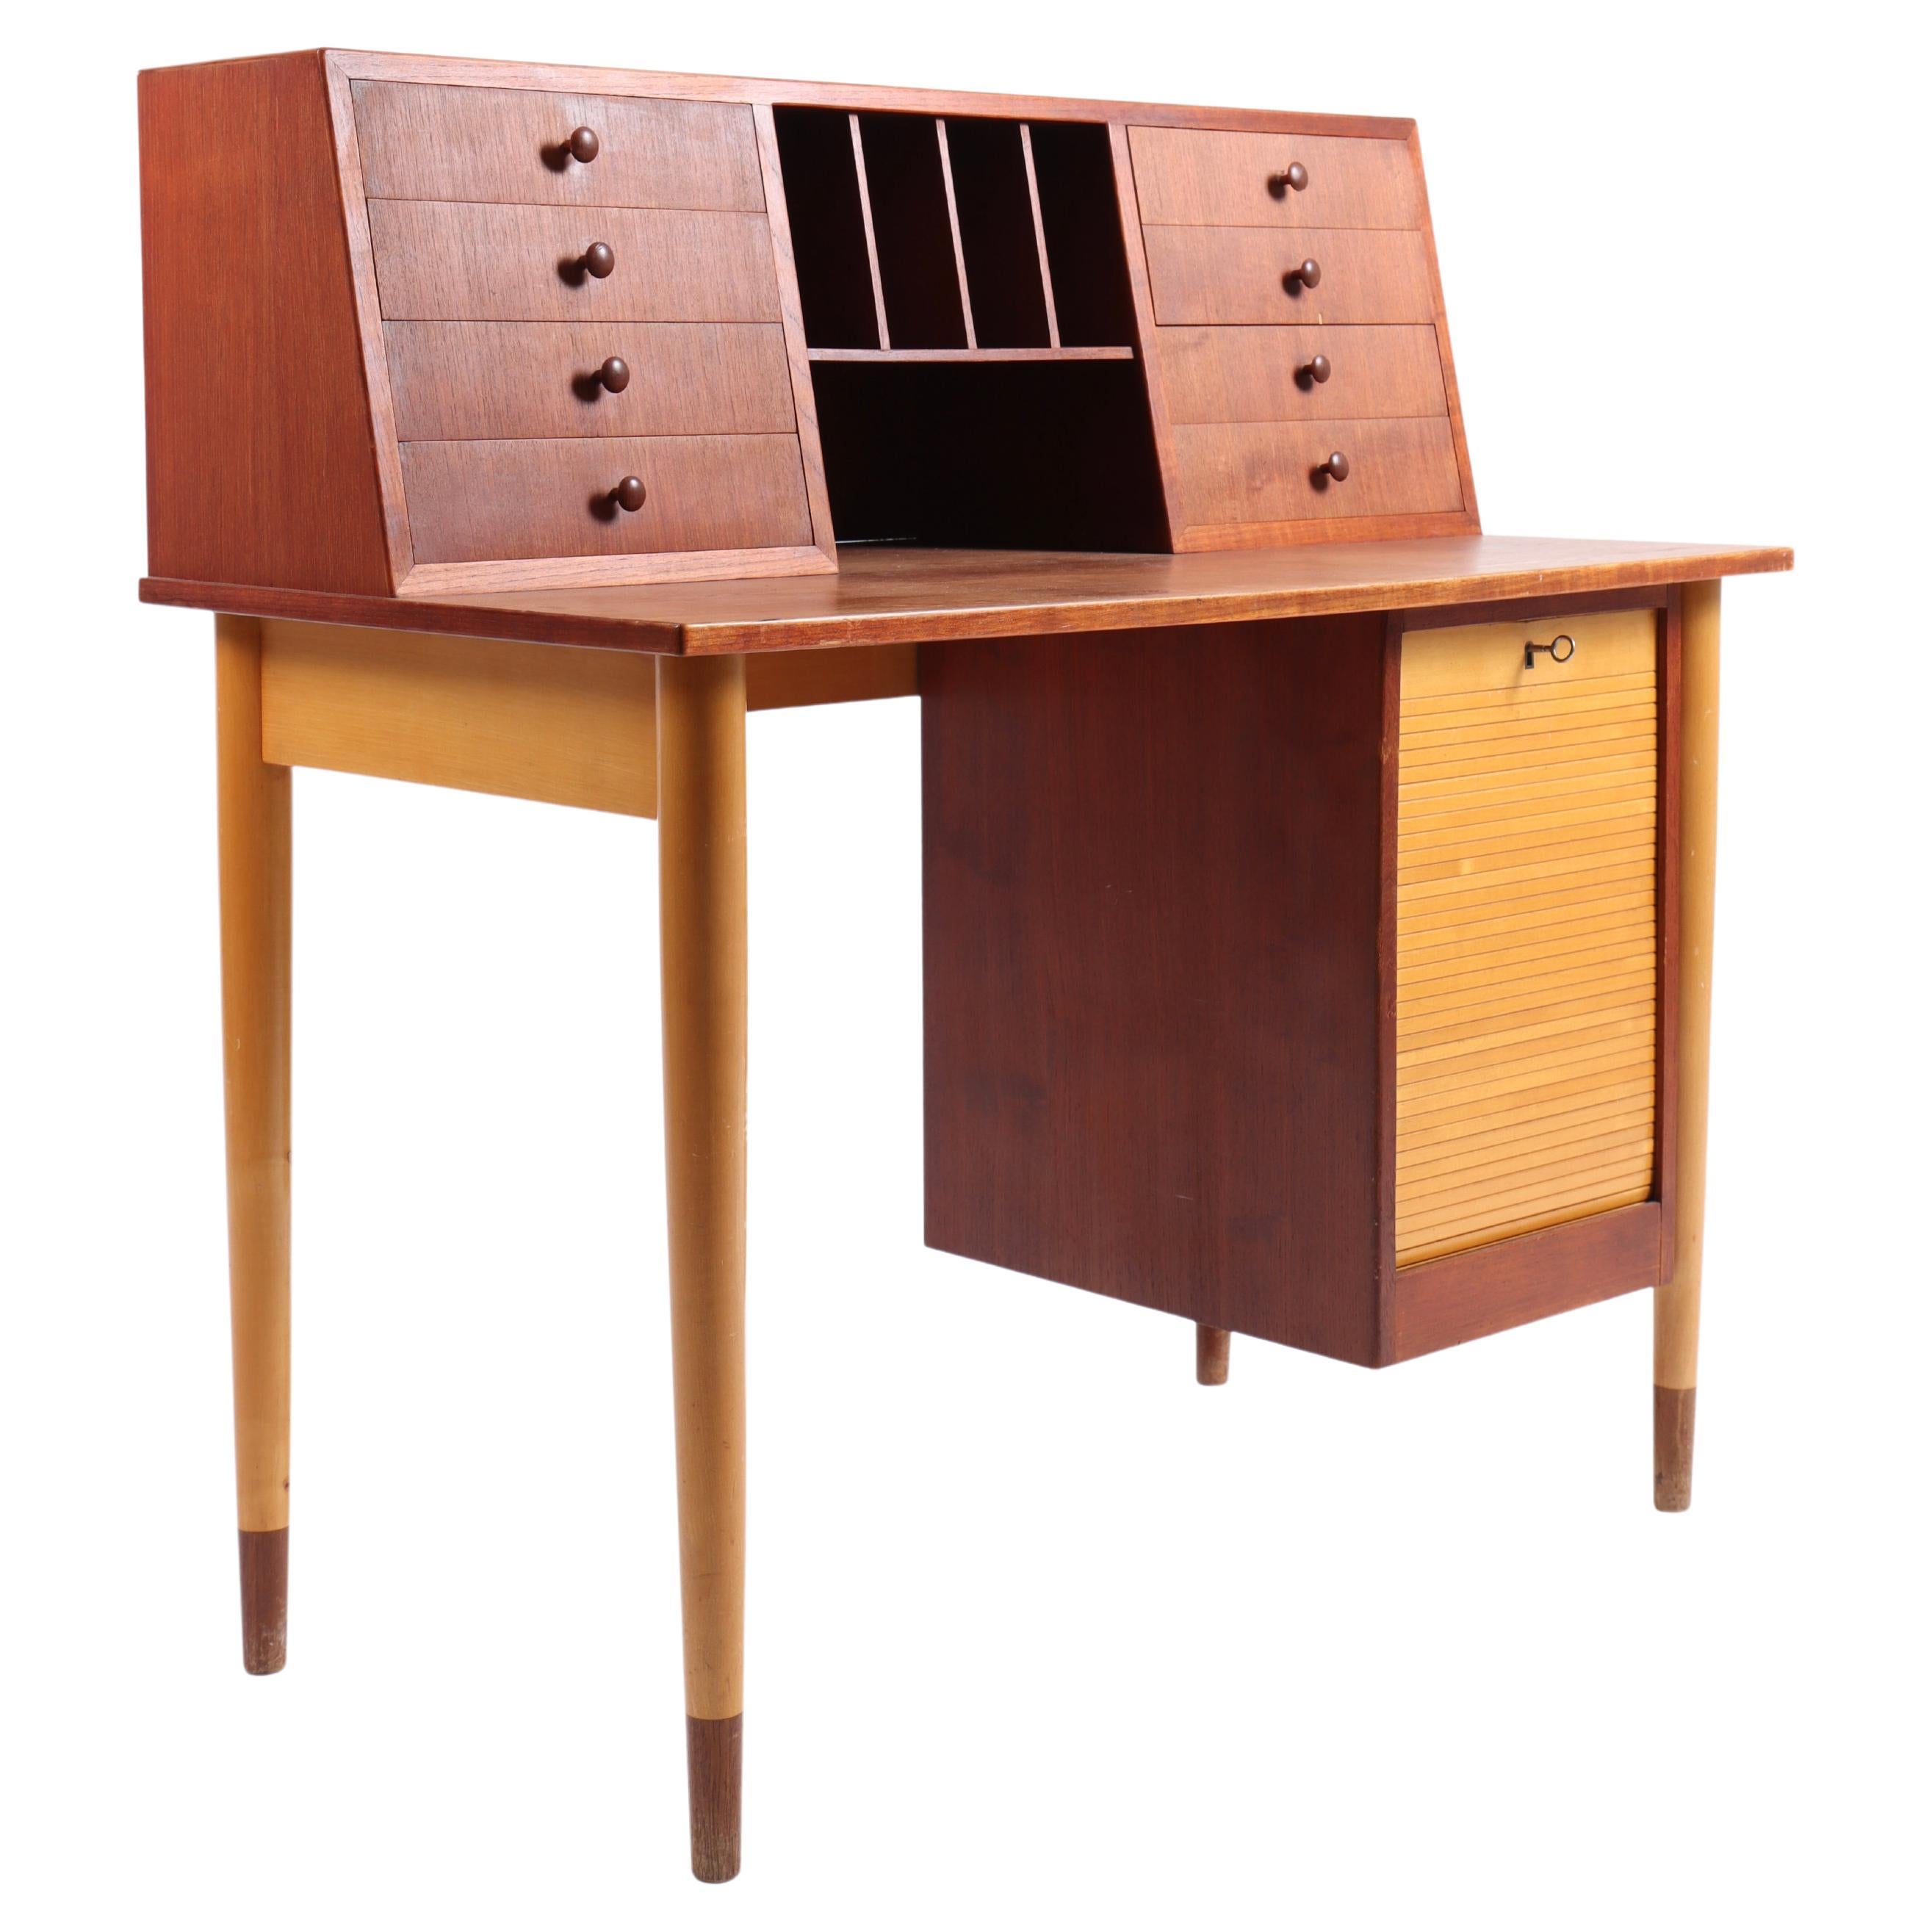 Midcentury Desk in Teak & Beech with Organizer, 1950s For Sale